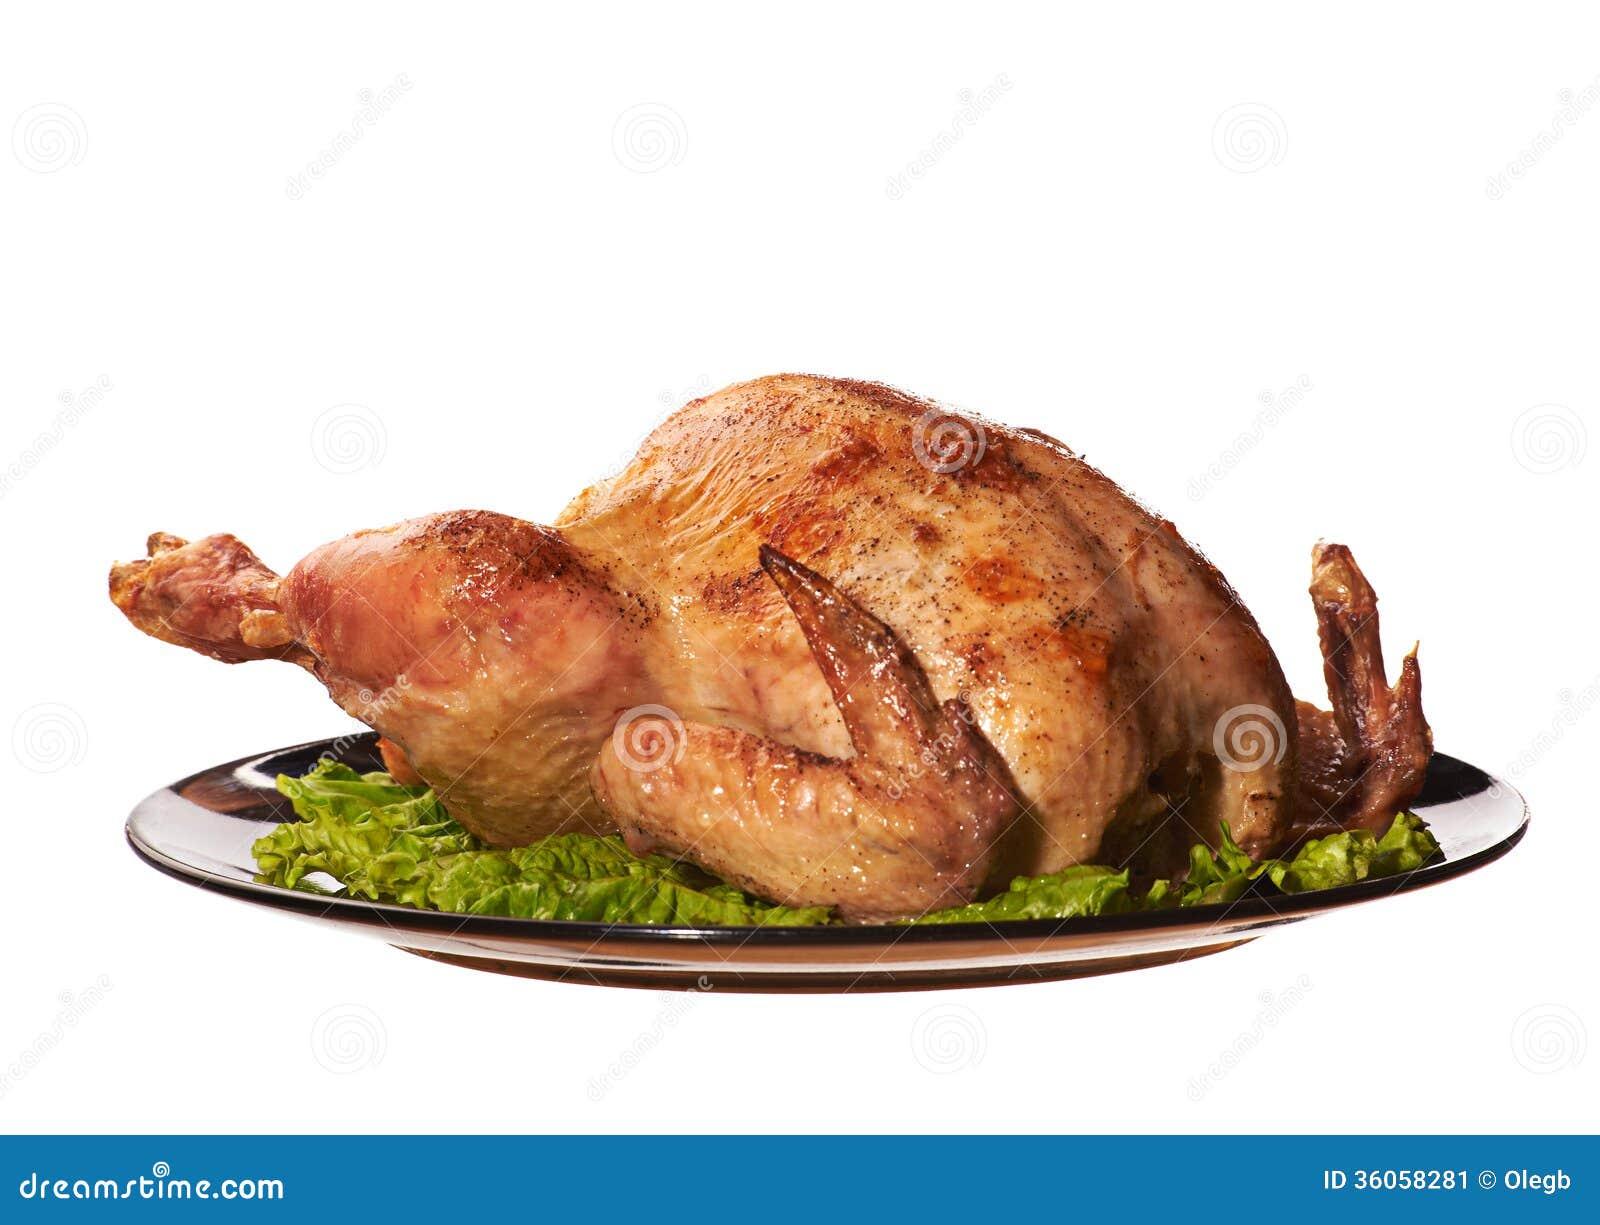 Roasted Chicken Stock Image - Image: 36058281